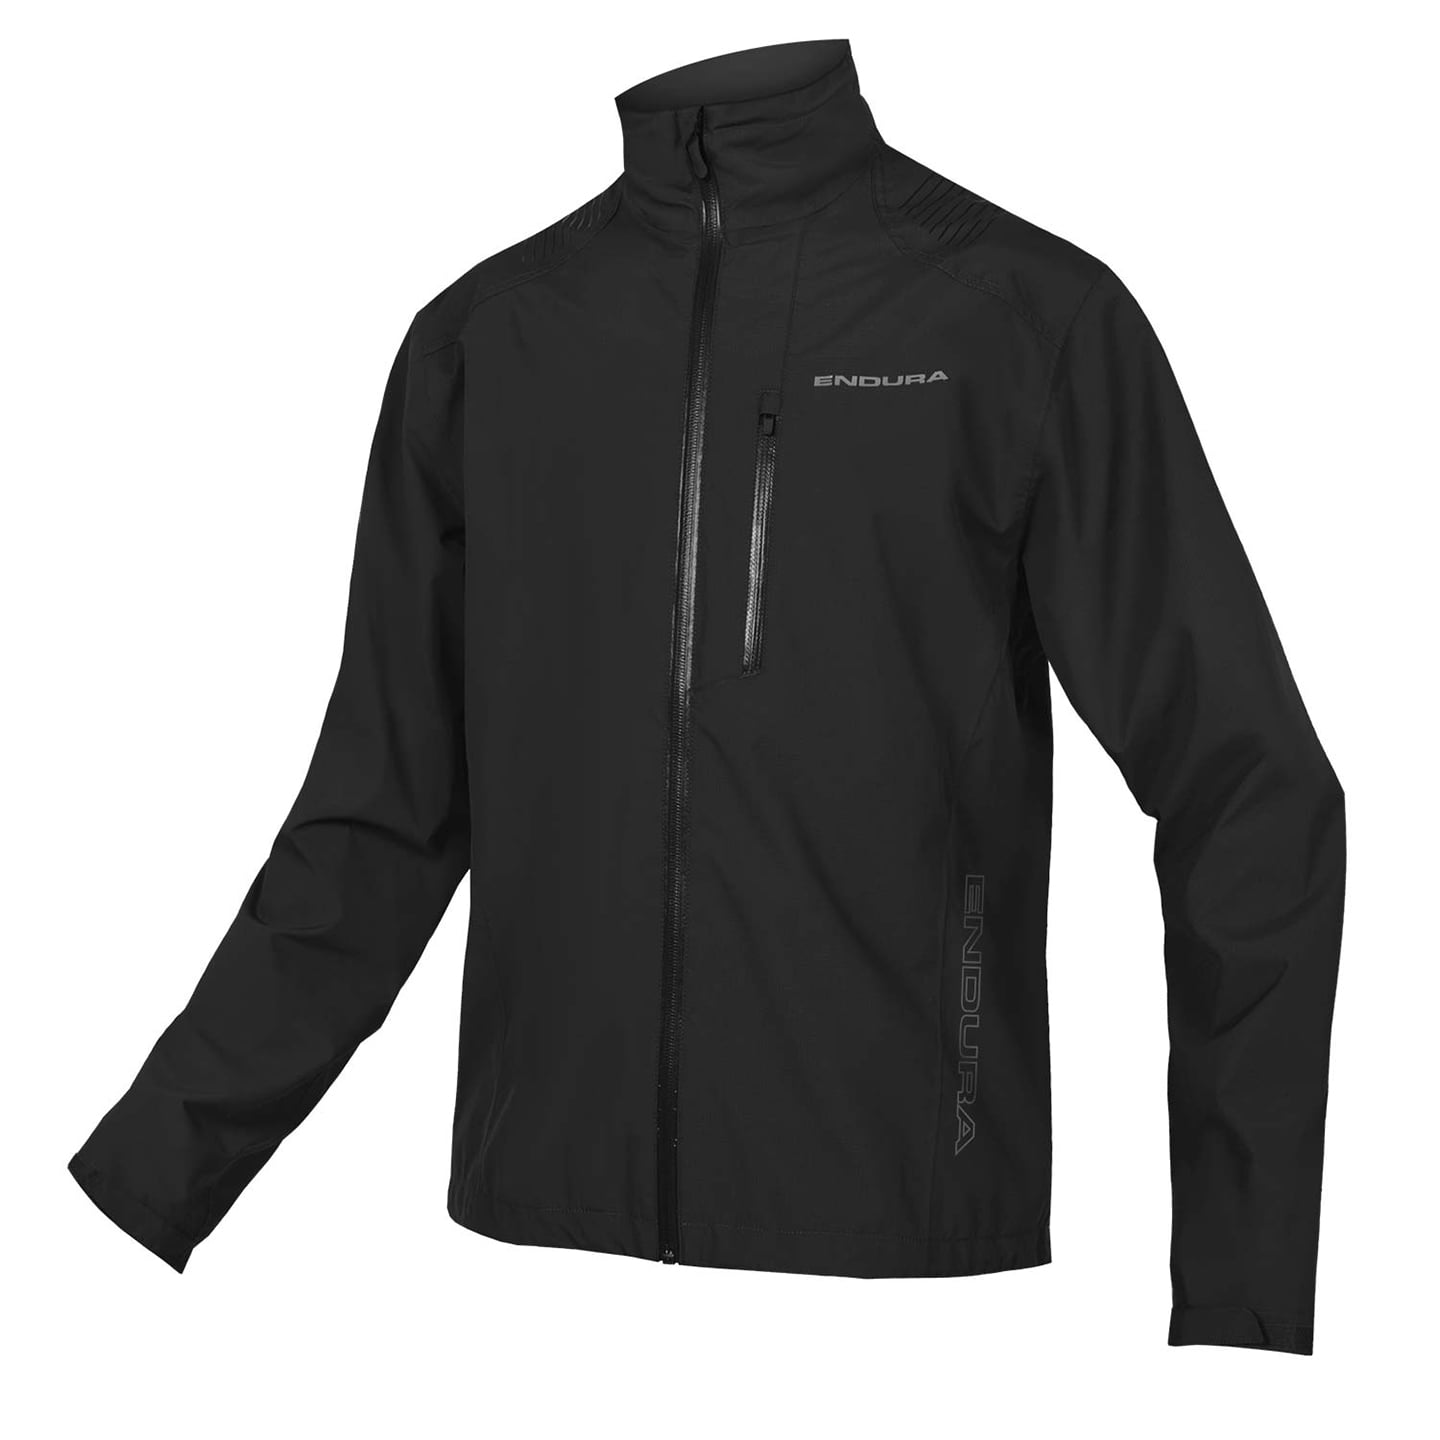 ENDURA Hummvee Waterproof Jacket, for men, size 2XL, Cycle jacket, Cycling clothing